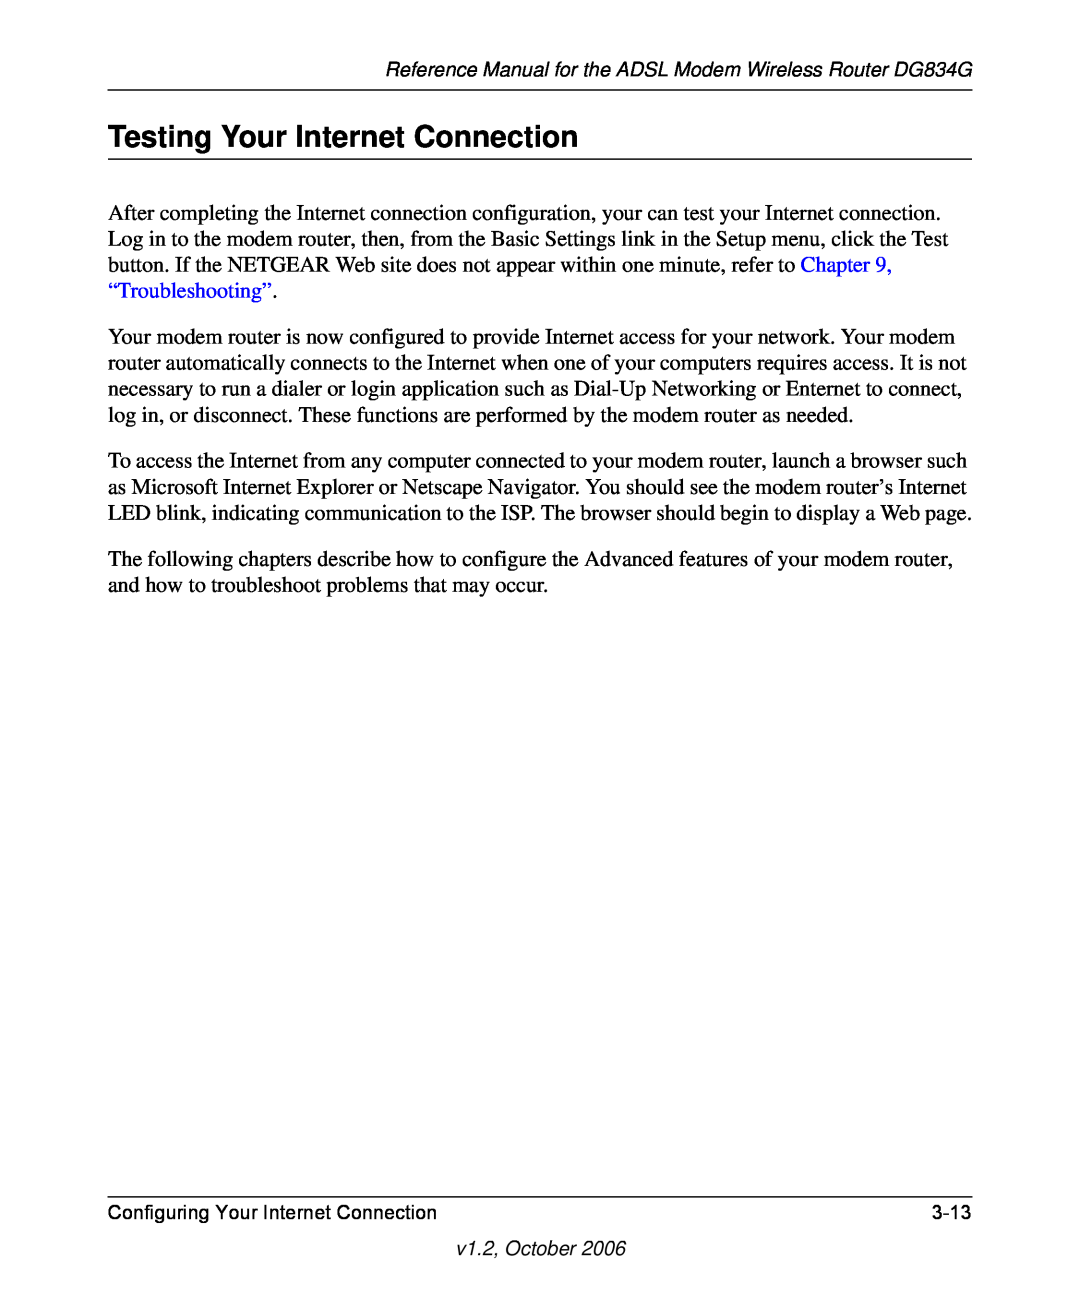 NETGEAR DG834G manual Testing Your Internet Connection 